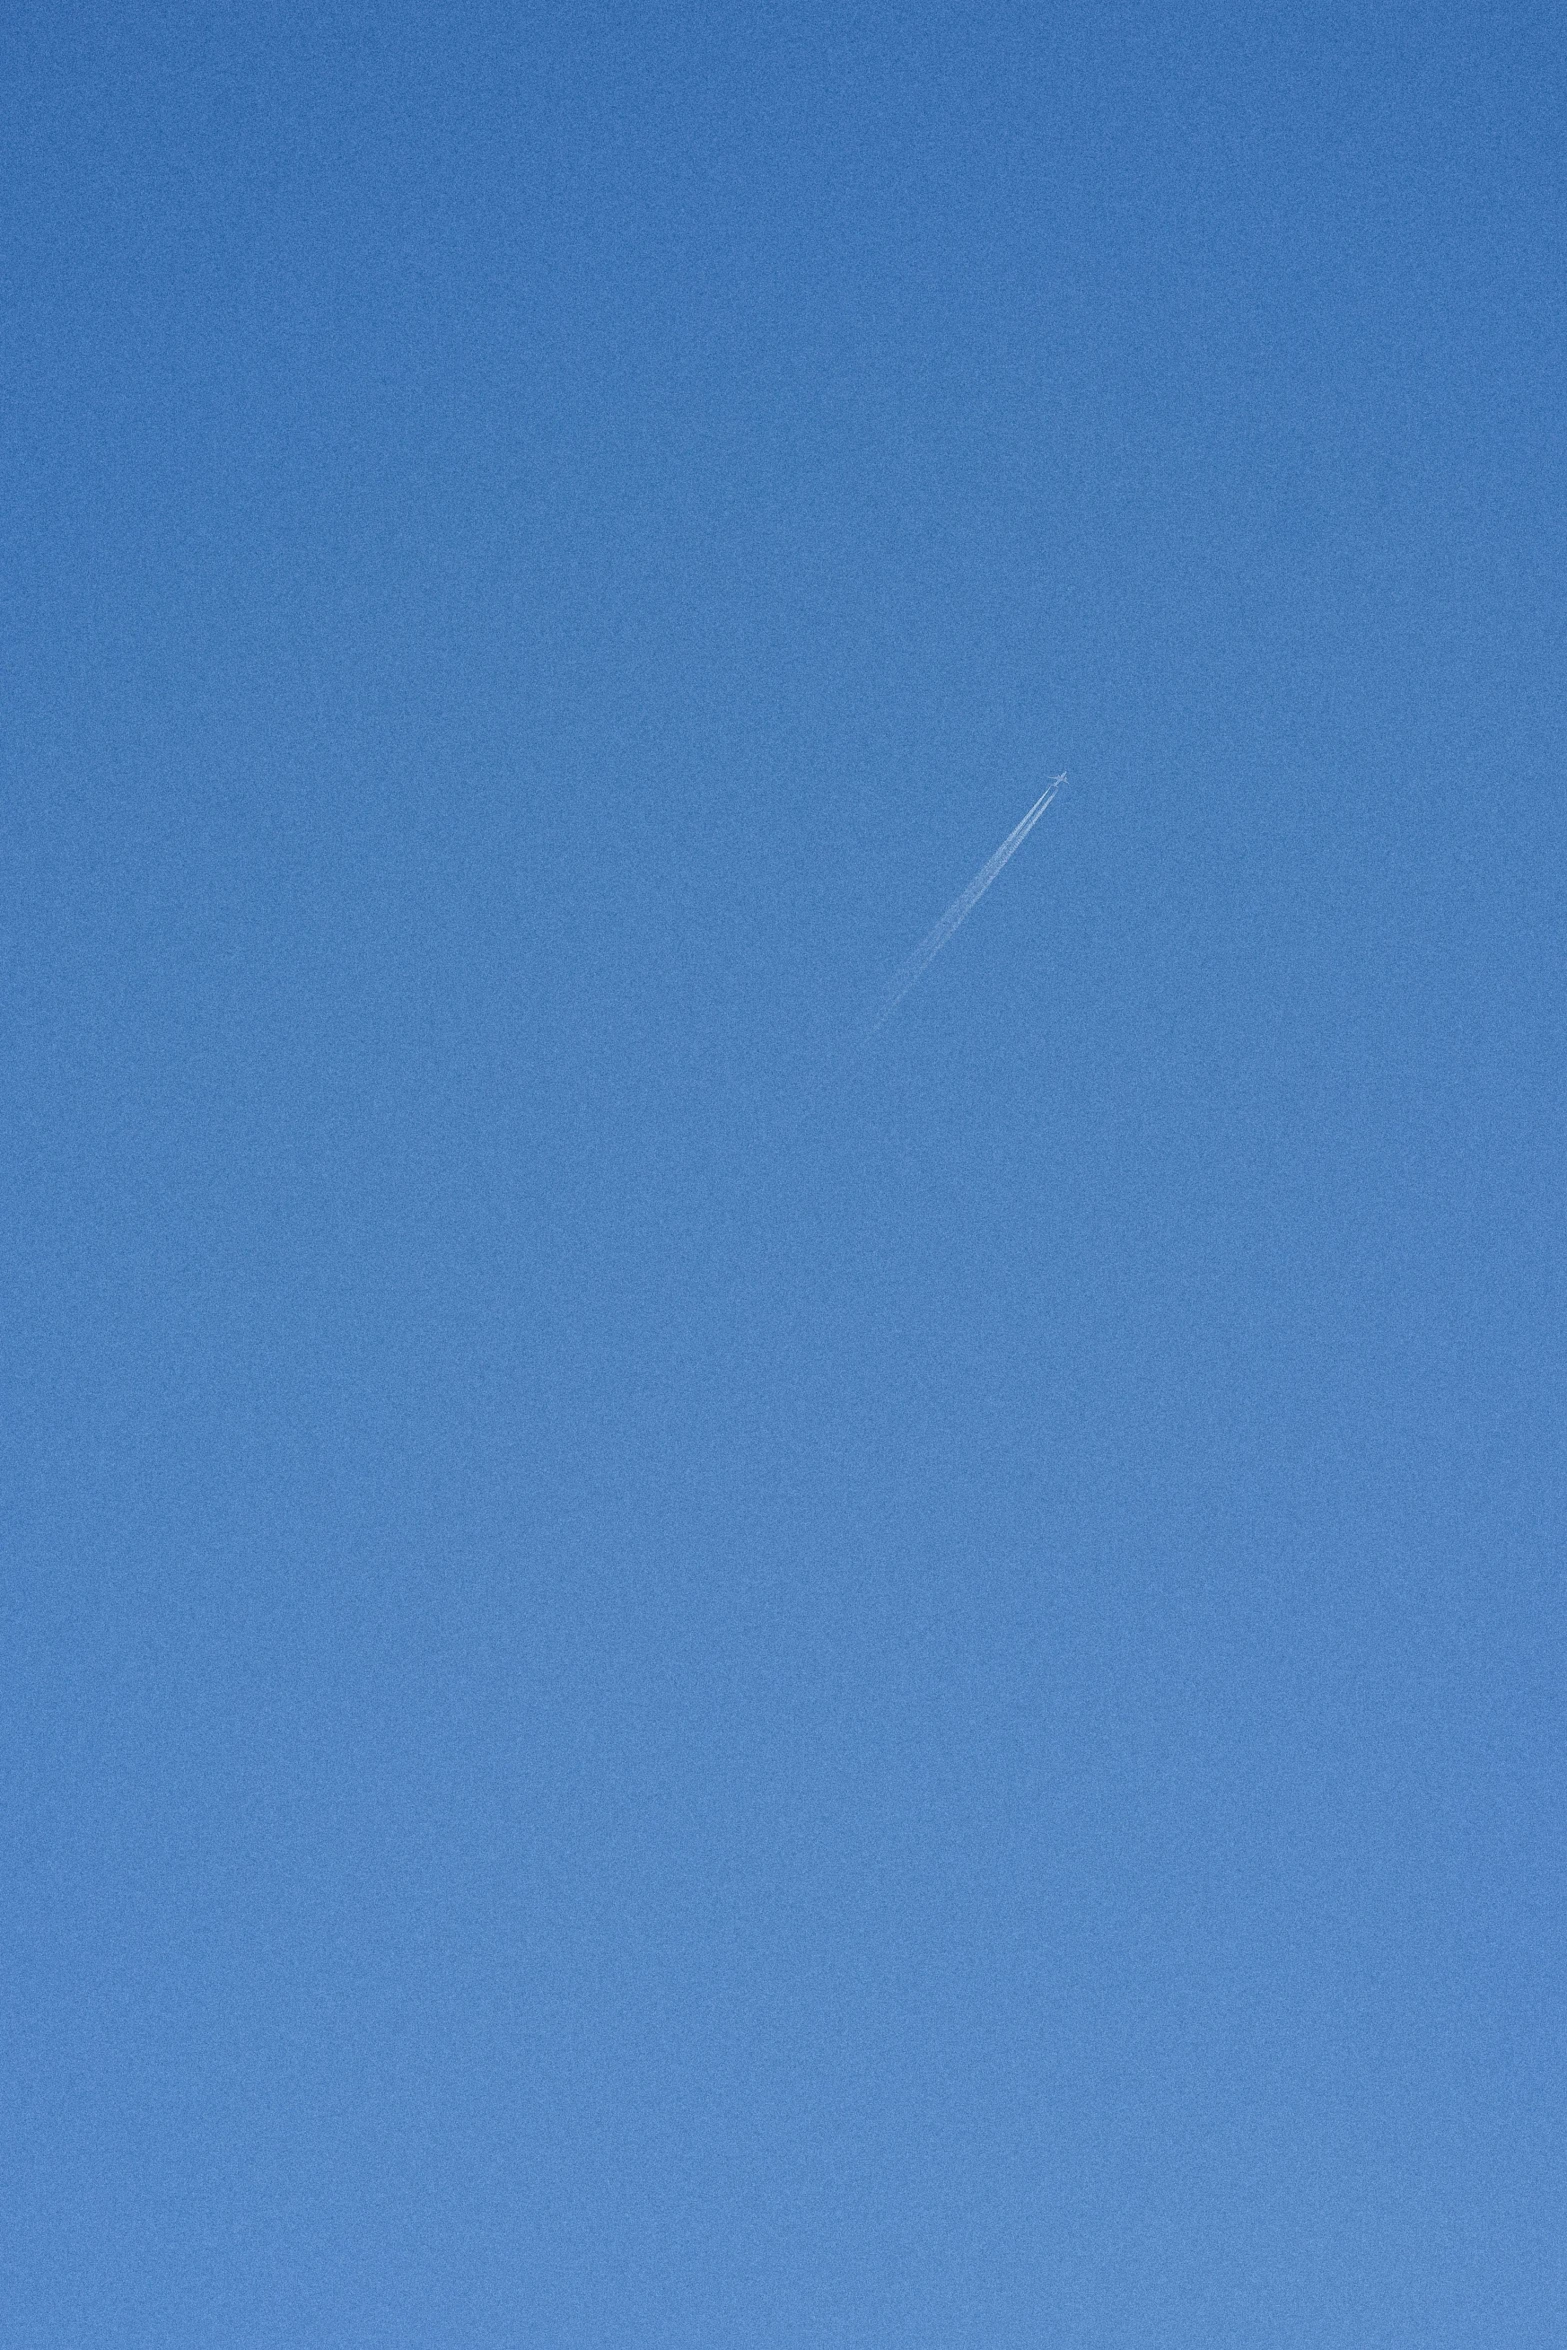 an airplane flies high in the blue sky